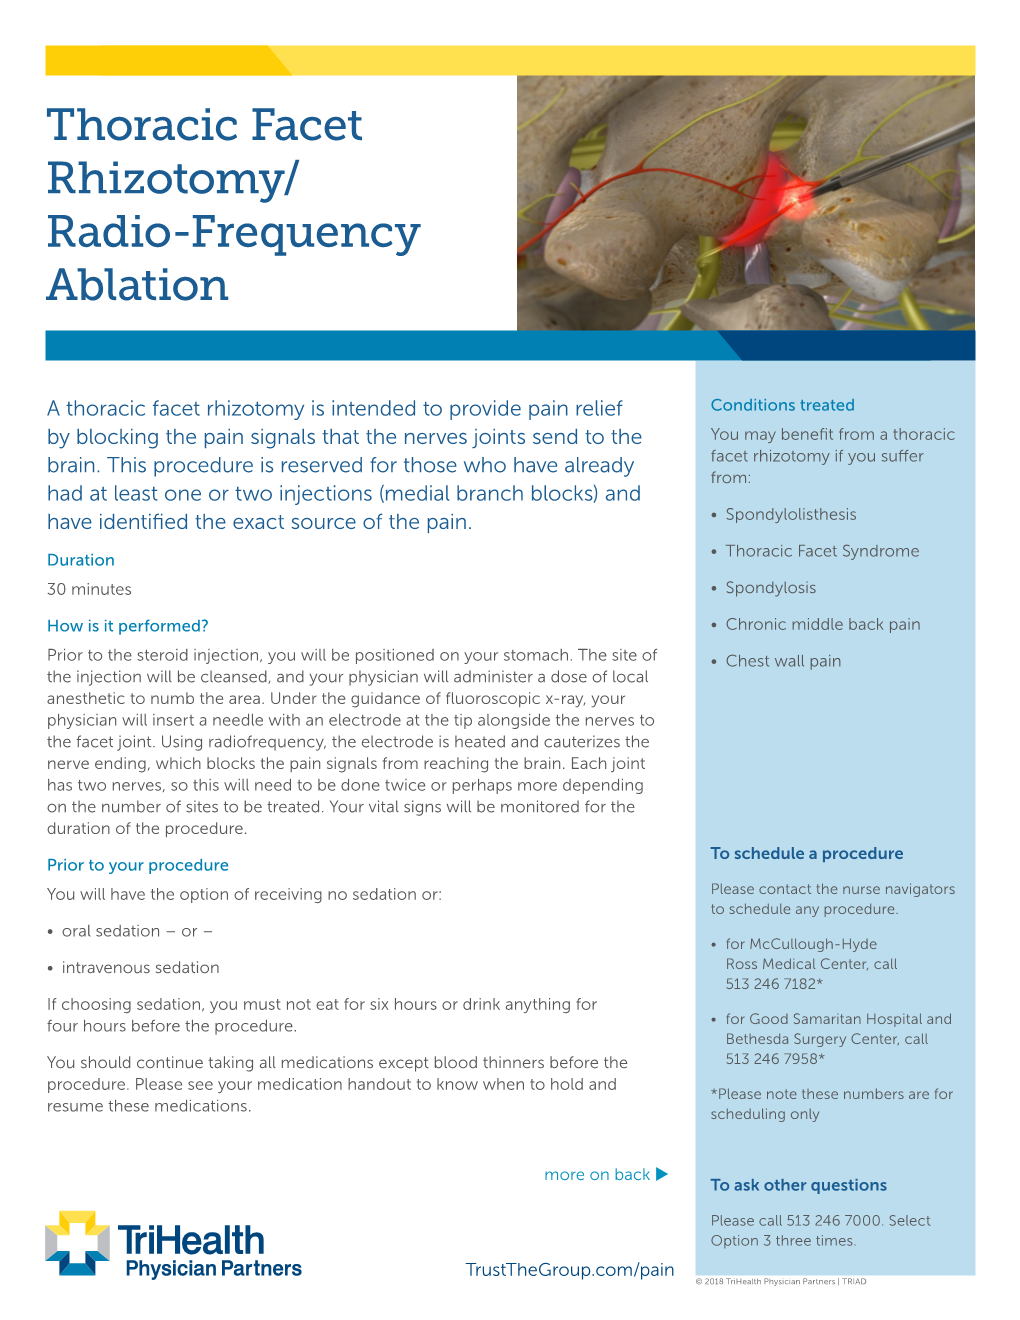 Thoracic Facet Rhizotomy/ Radio-Frequency Ablation